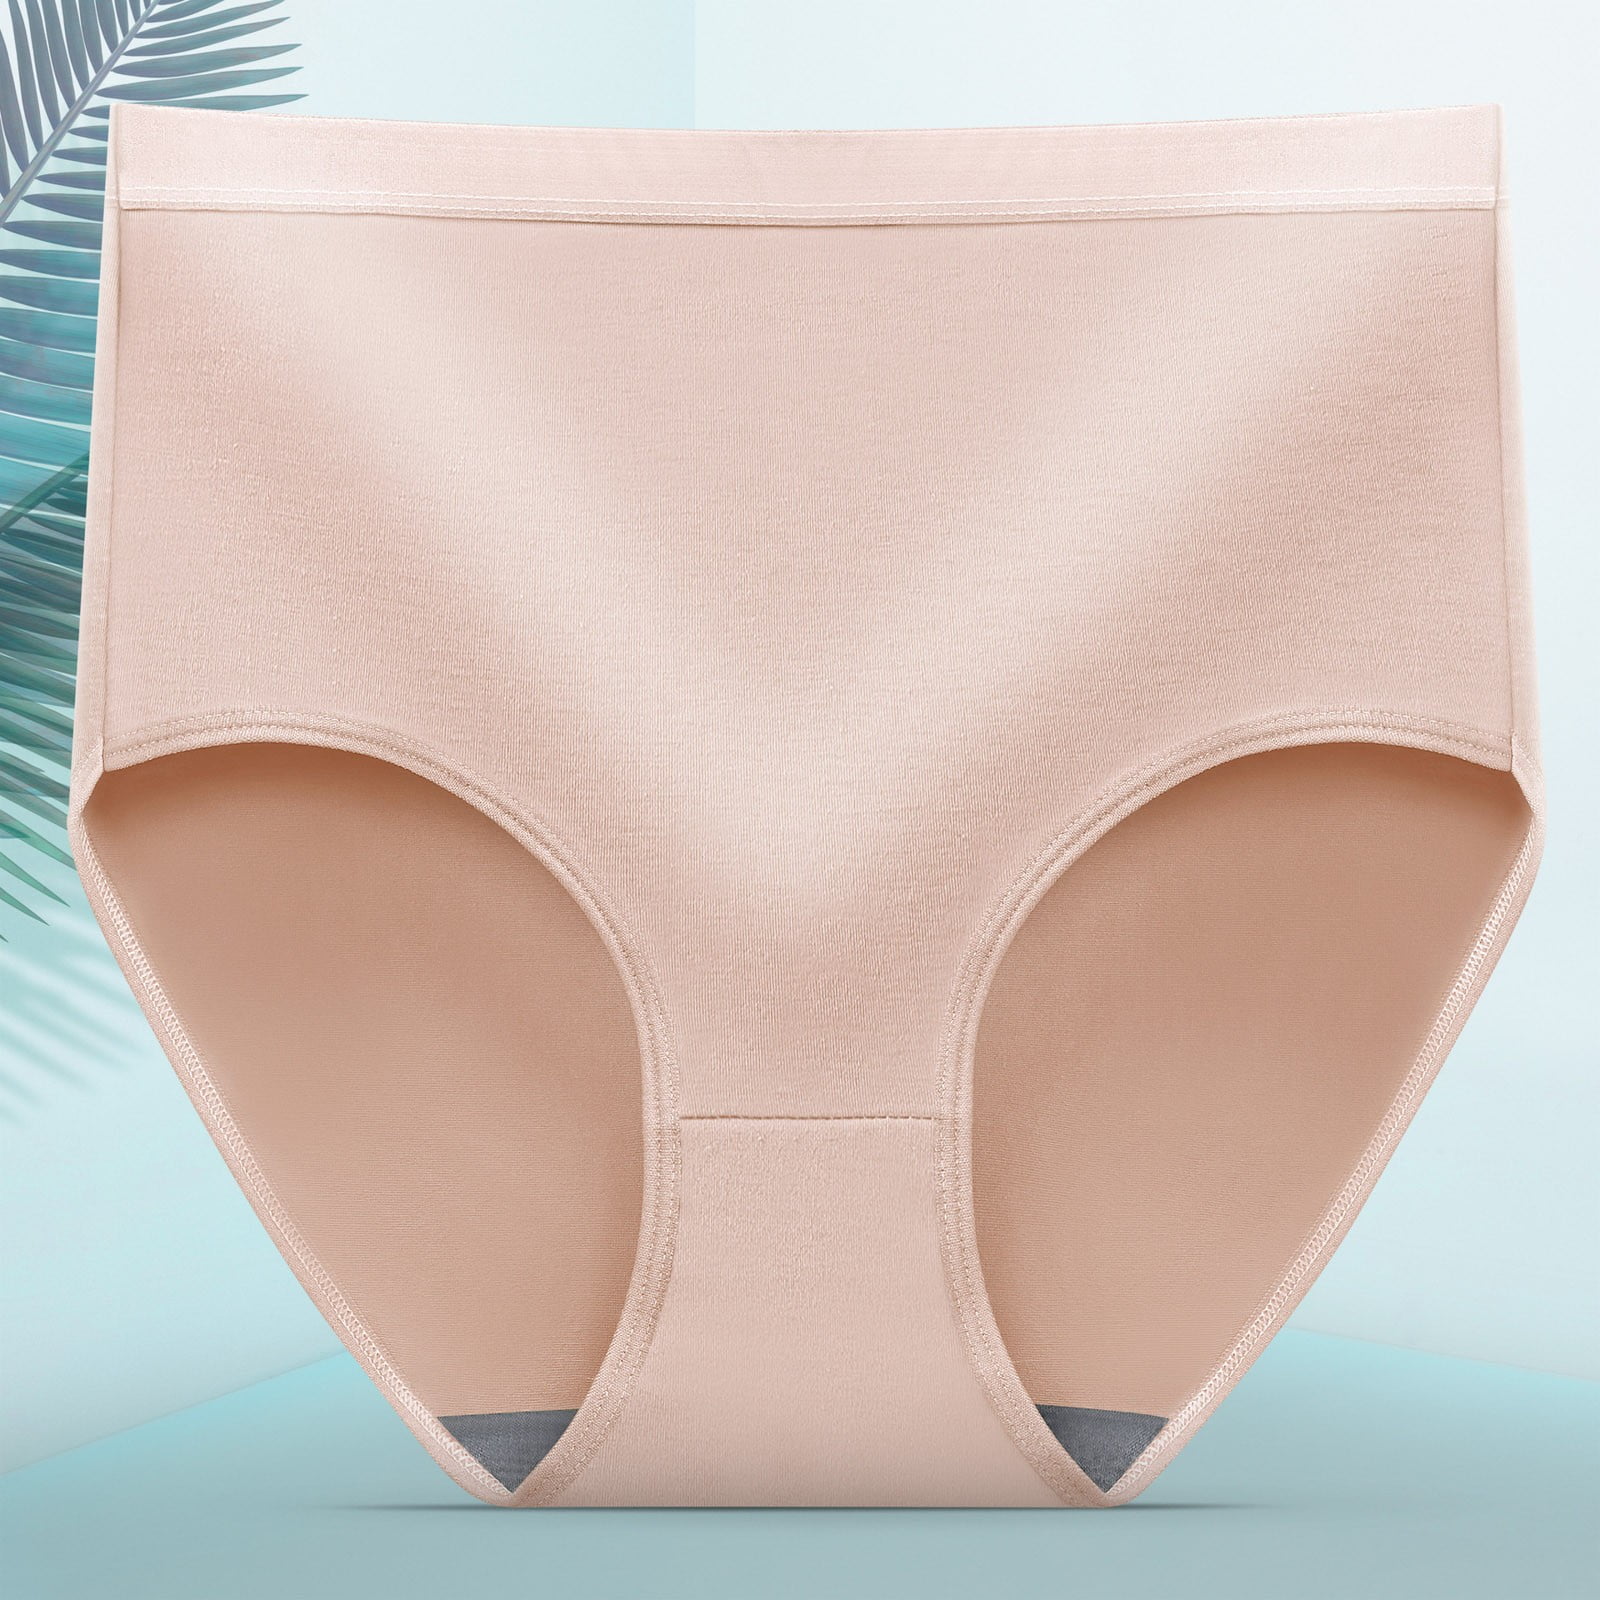 adviicd Lingery for Woman Womens Underwear Brief Ladies Cheeky